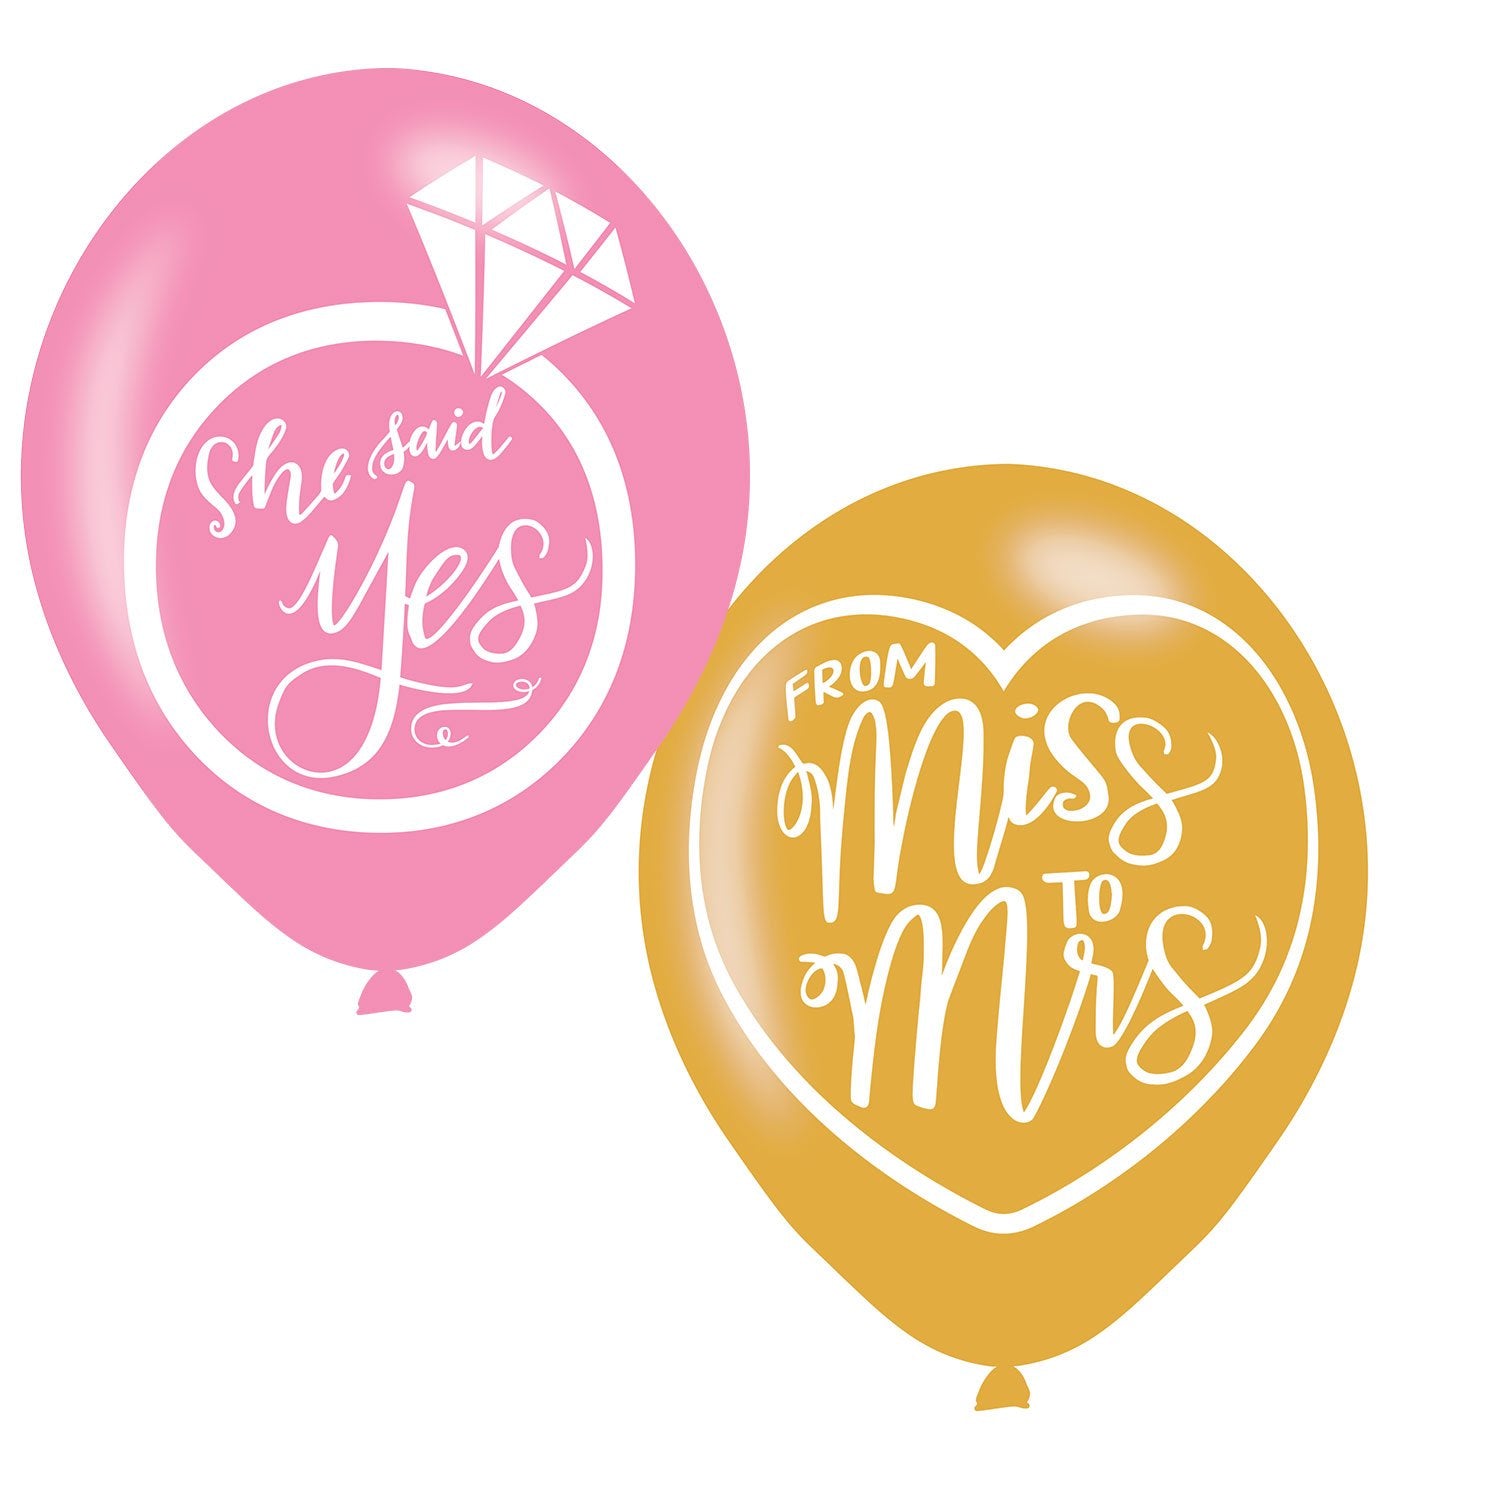 She Said Yes & Miss to Mrs Balloons (28cm) Amscan Australia